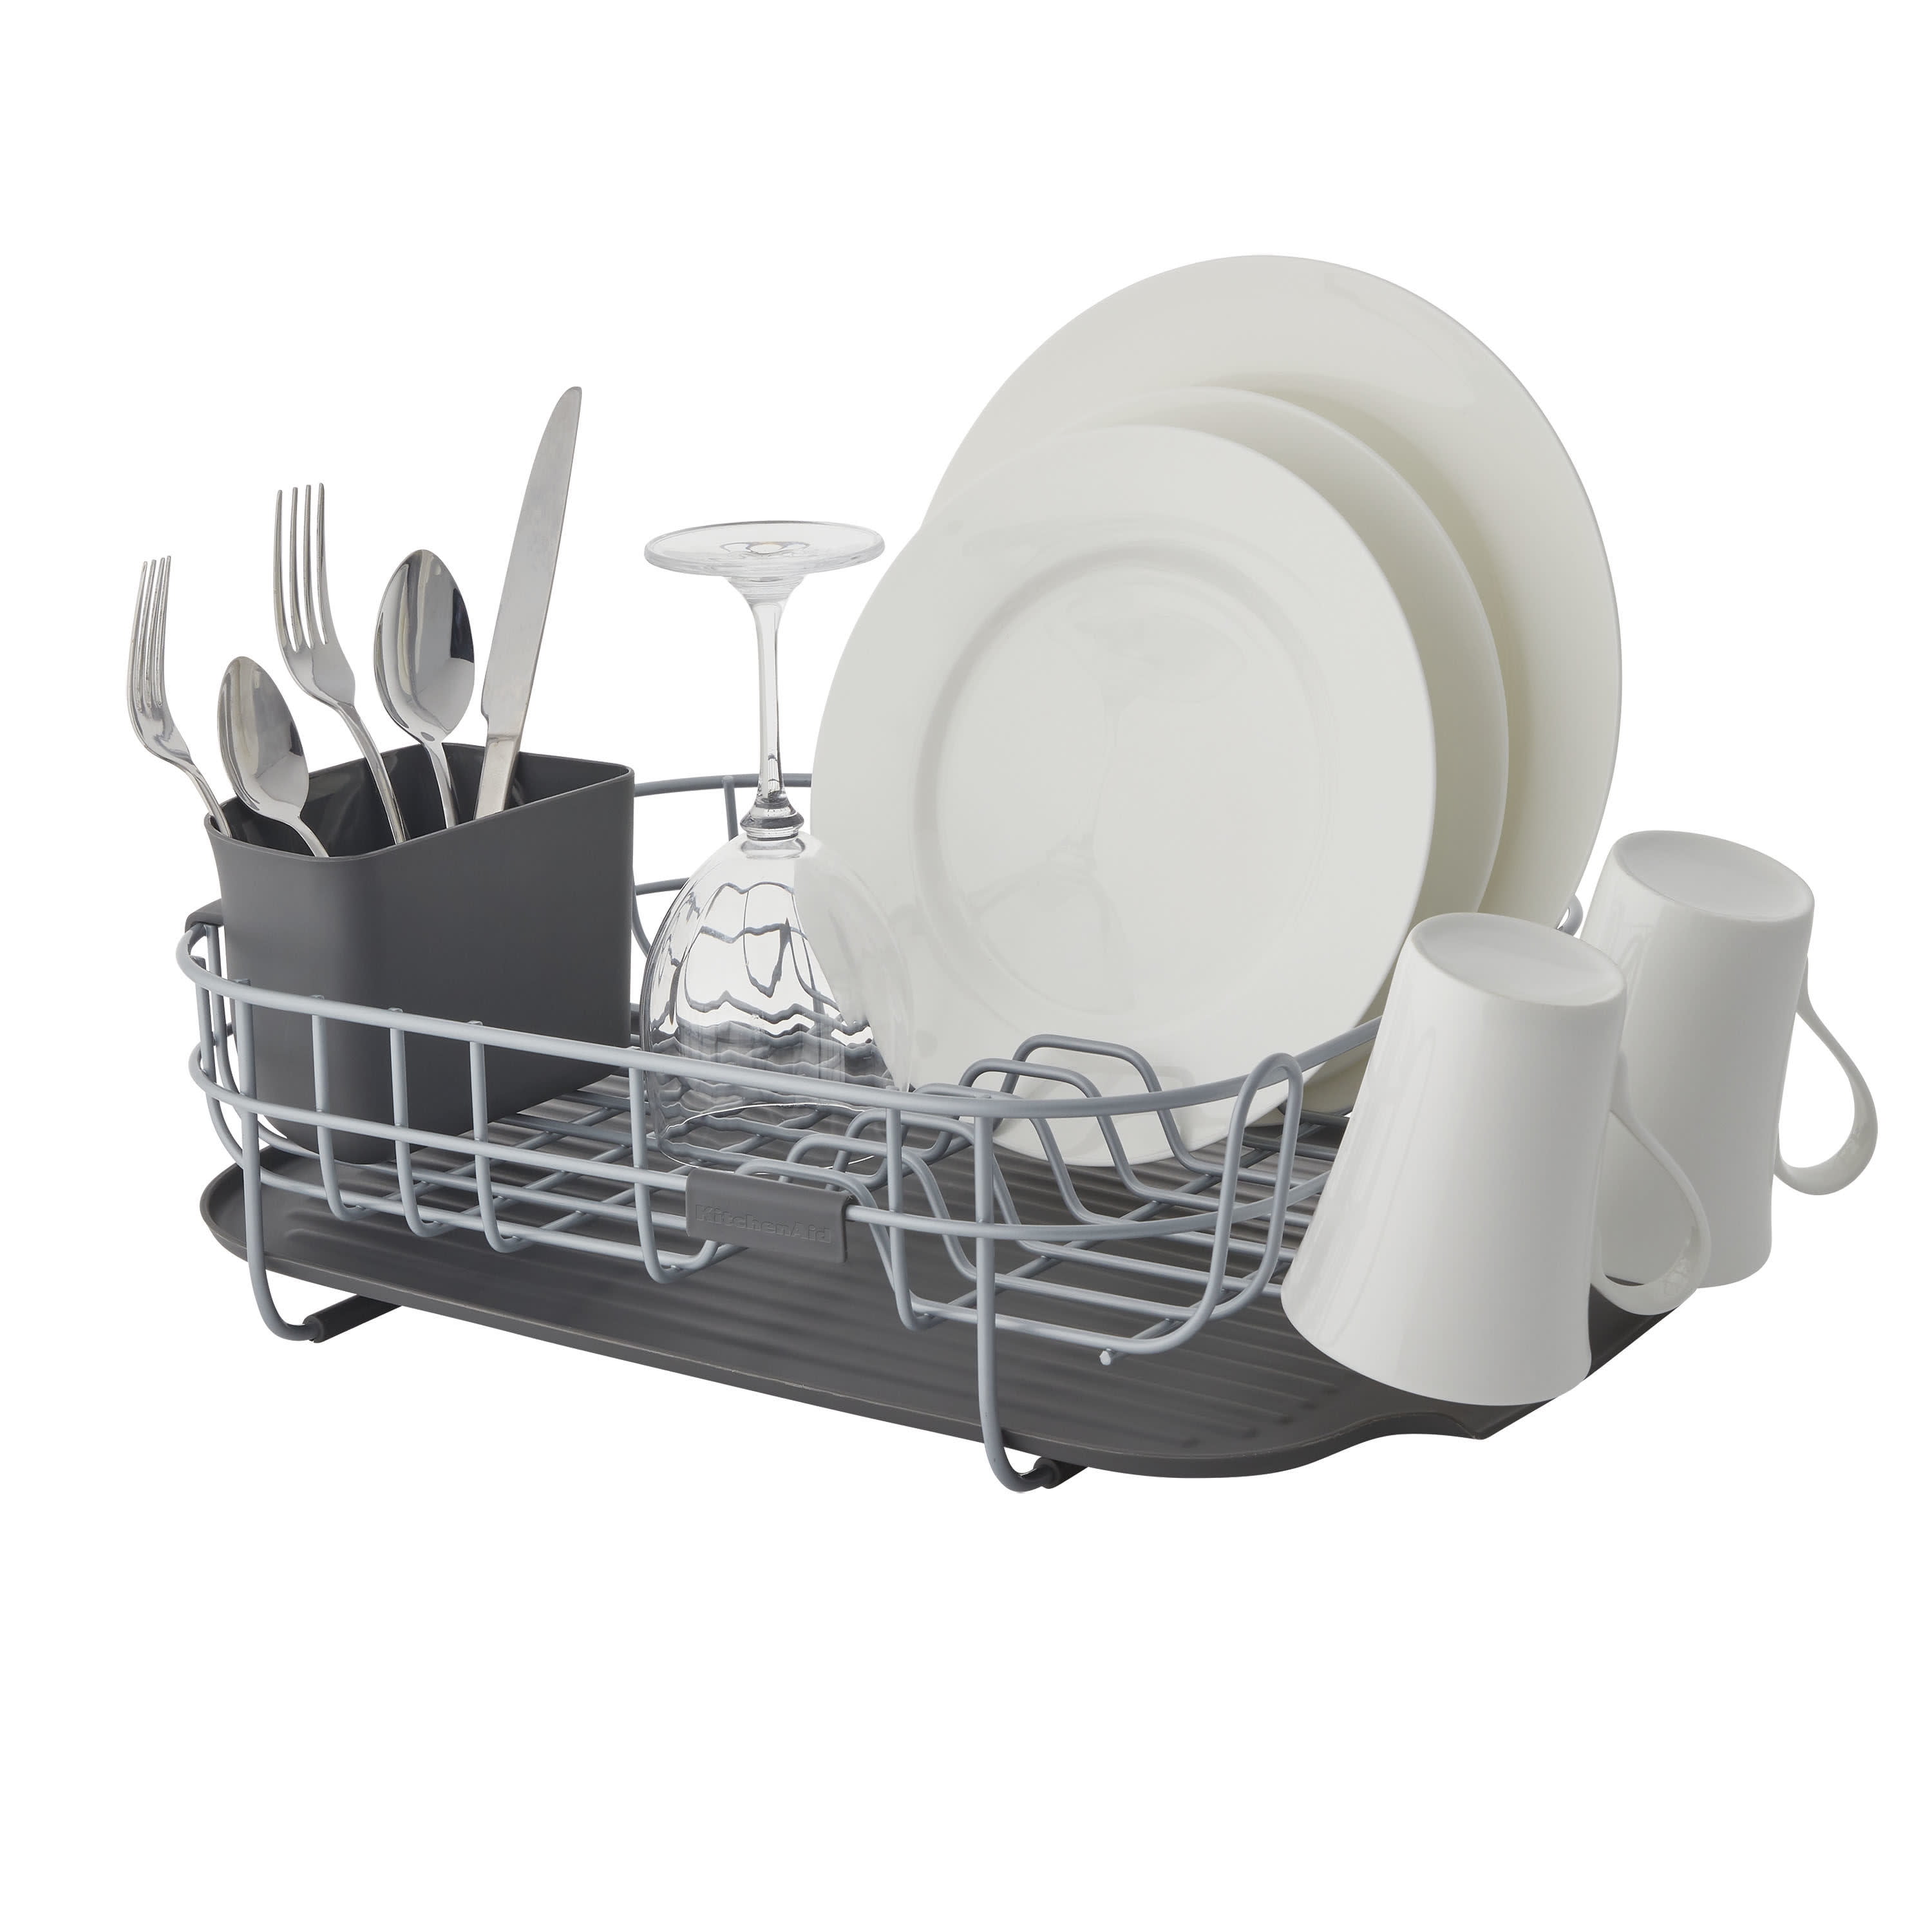 KitchenAid Full Size Dish Rack Light Grey